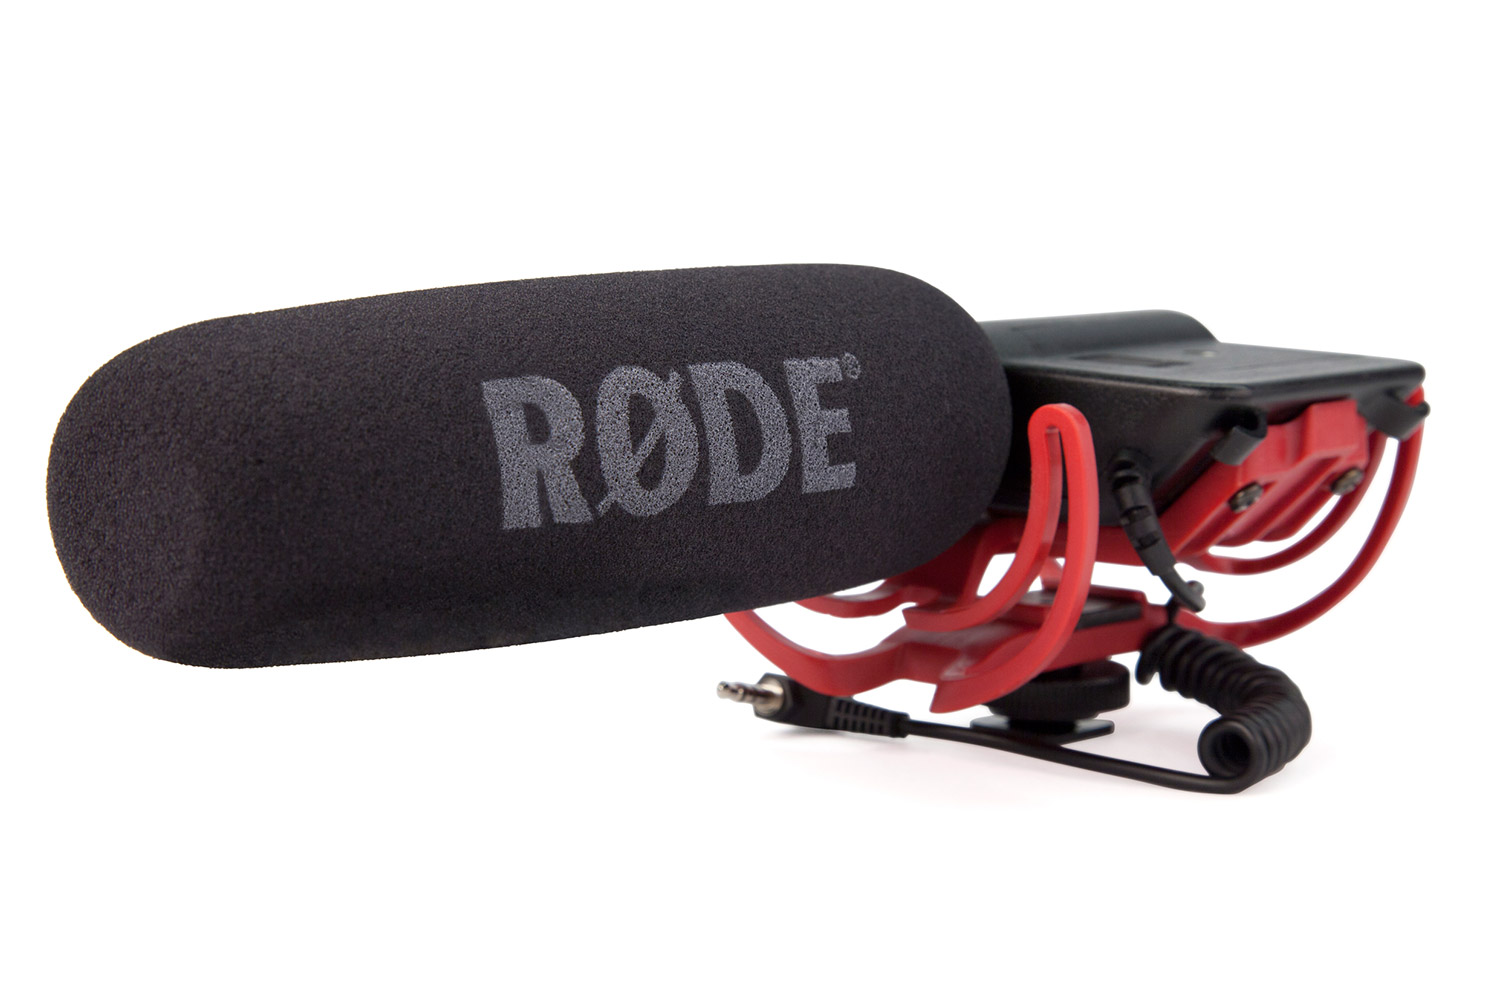 Rode VideoMic Rycote по цене 13 550 ₽